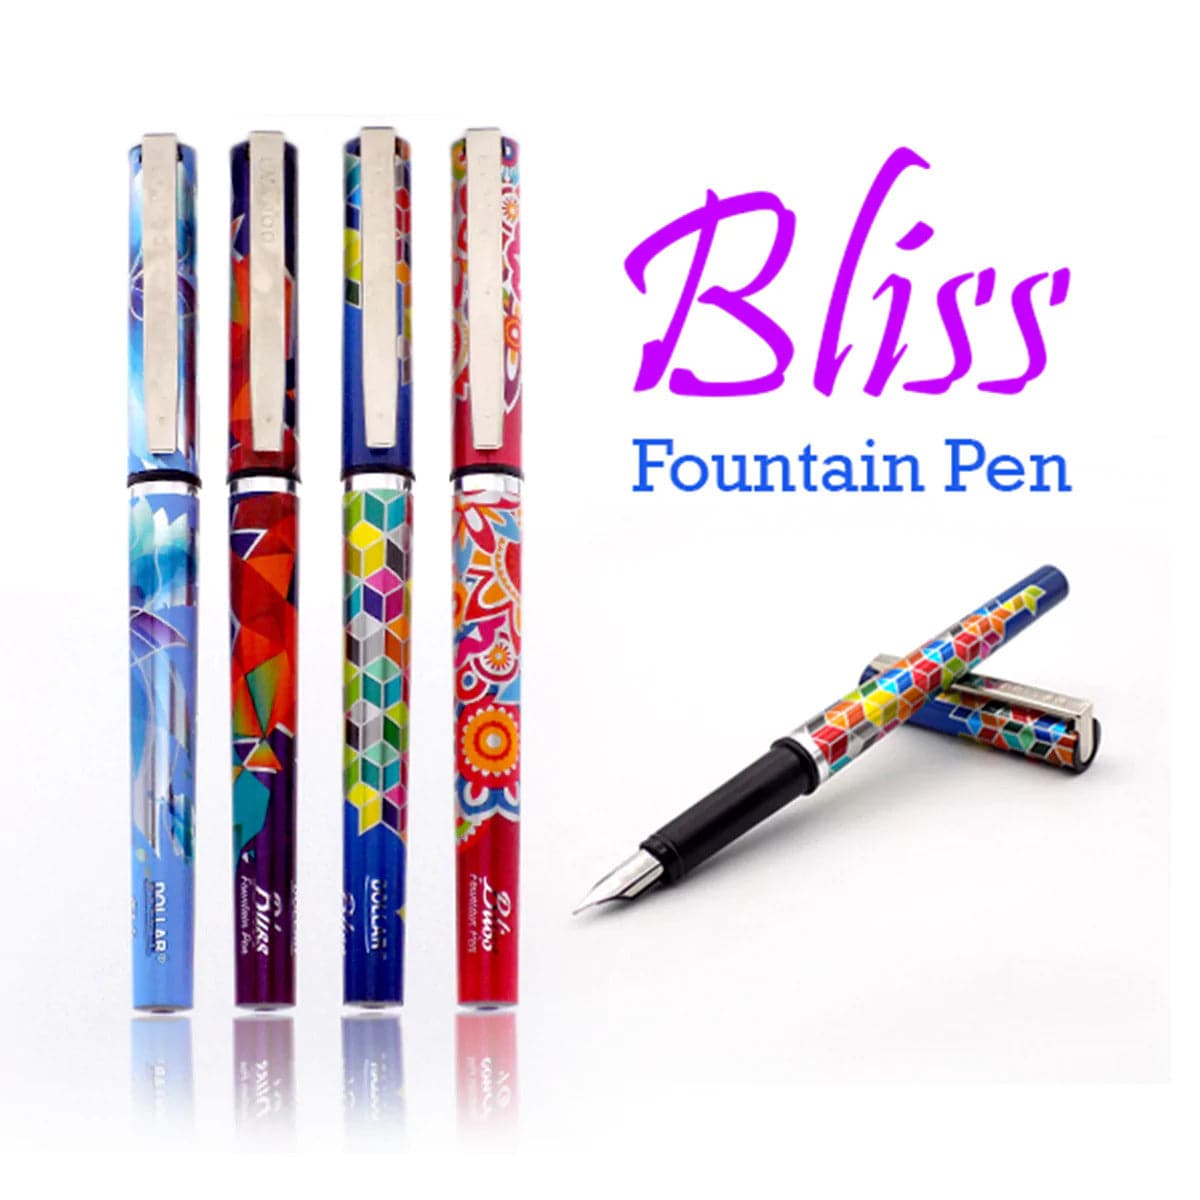 Dollar Bliss Fountain Pen Pack of 10